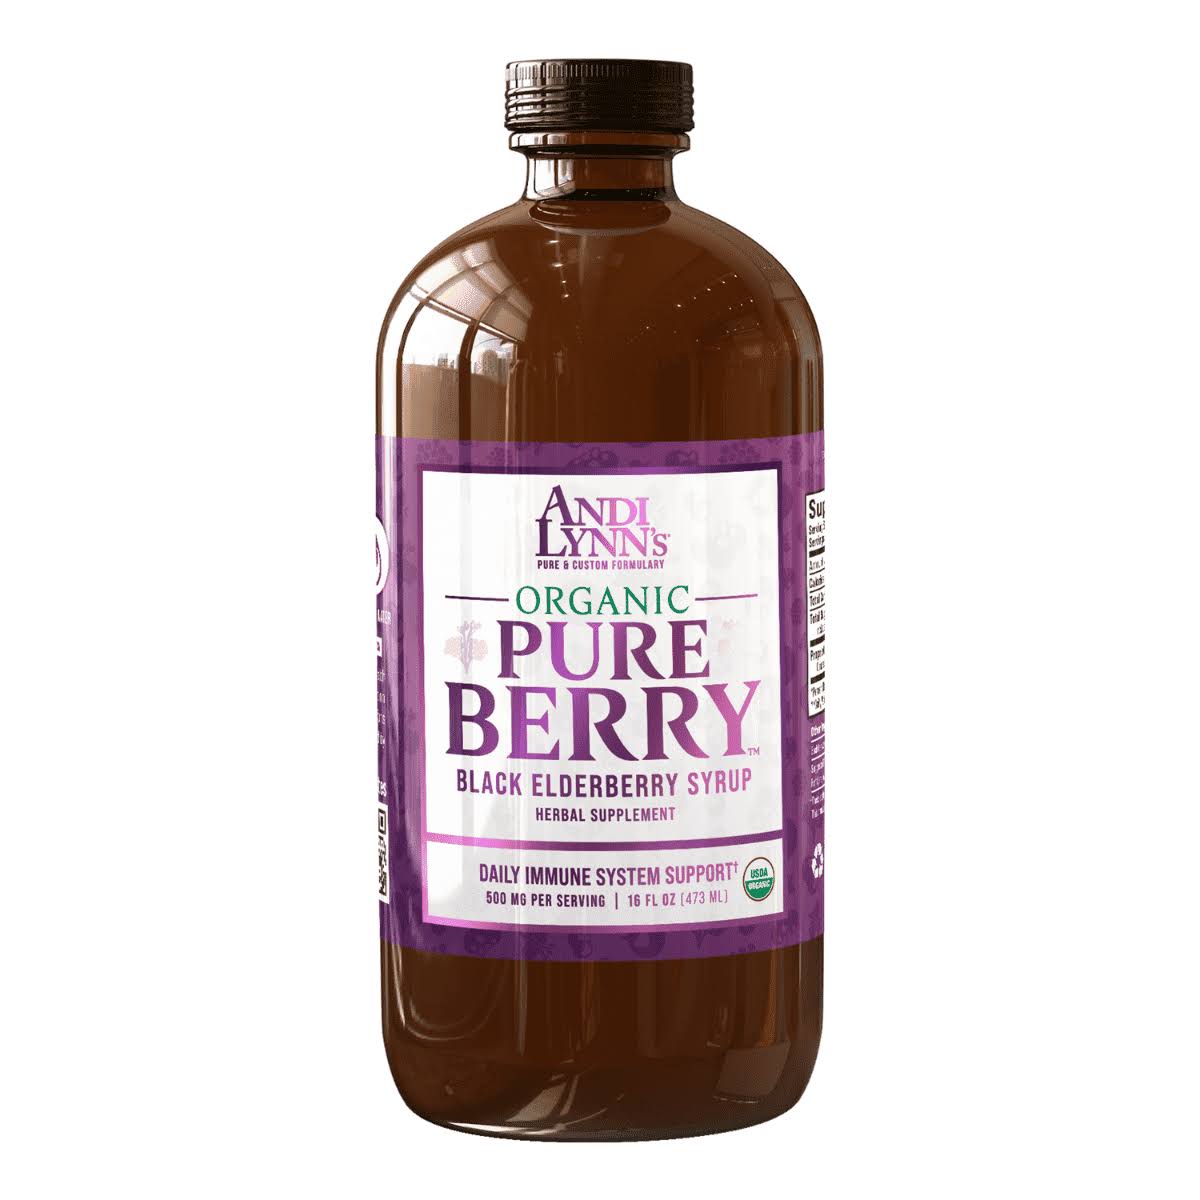 Andi Lynns Pure Black Elderberry Syrup With Honey - Original Sambucus